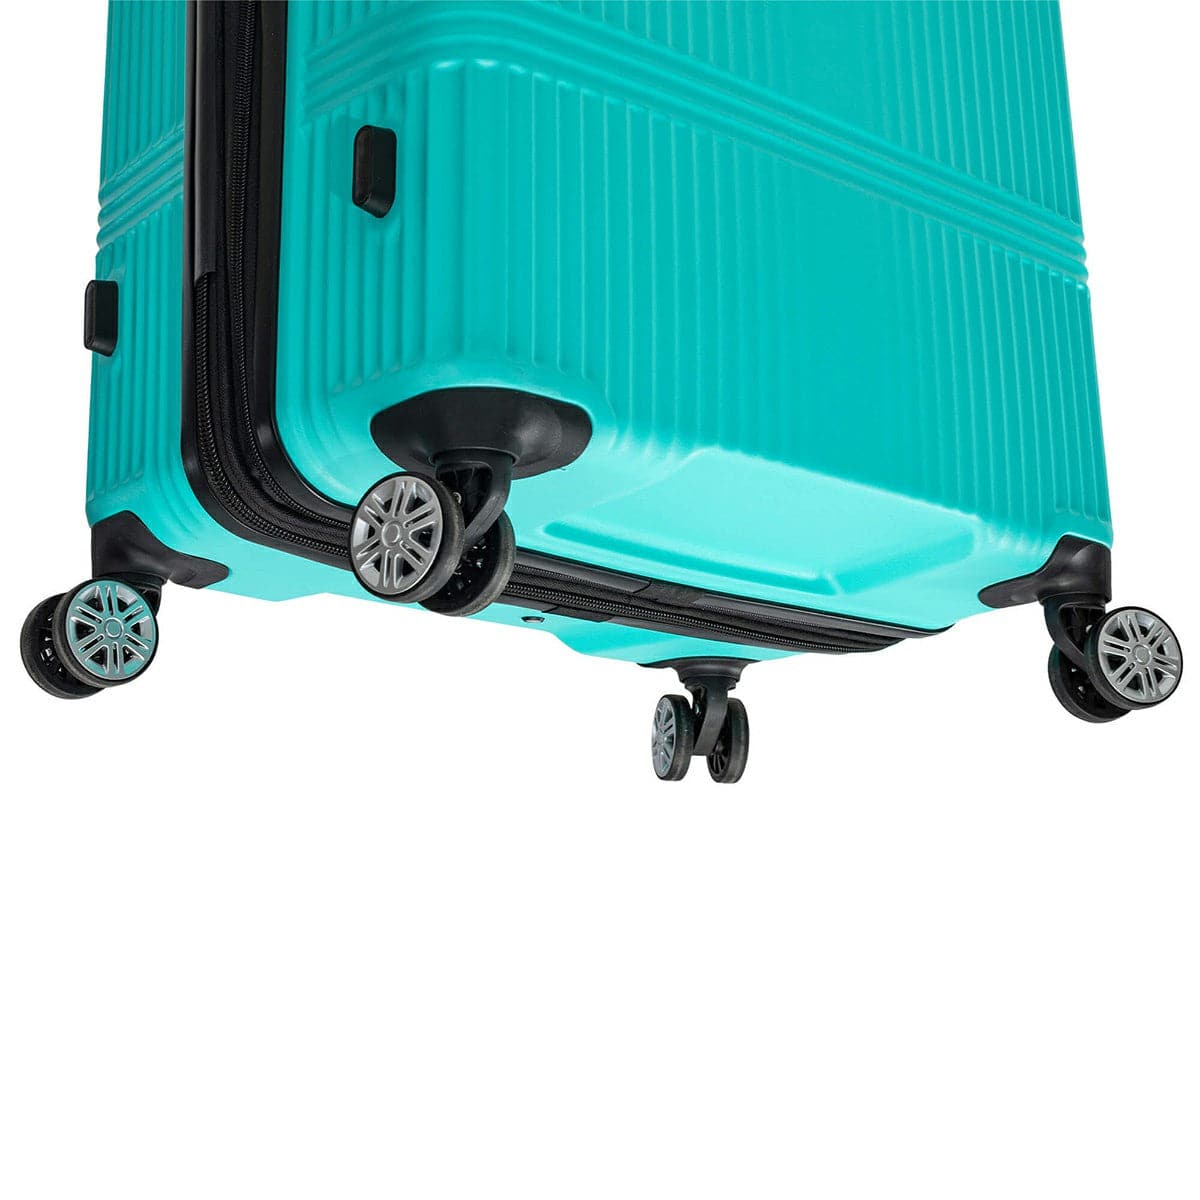 Mancini Adelaide Lightweight Spinner Luggage Set